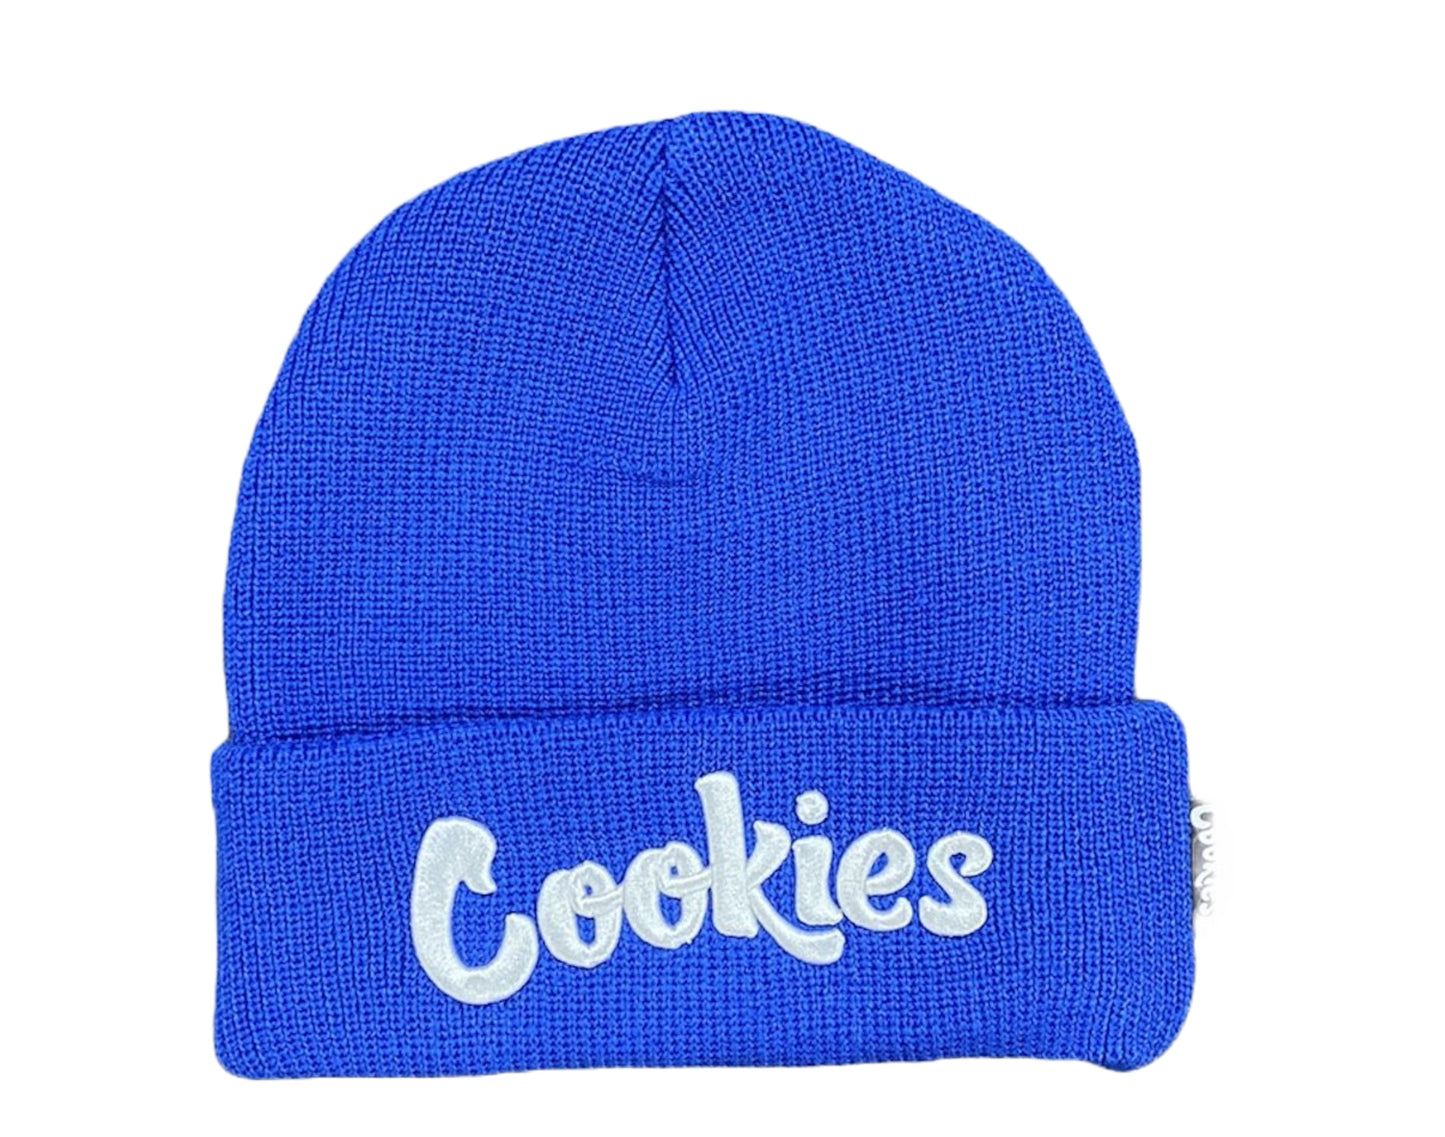 Cookies Original Logo Thin Mint Royal/White Knit Beanie Hat 1546X4388-RYW